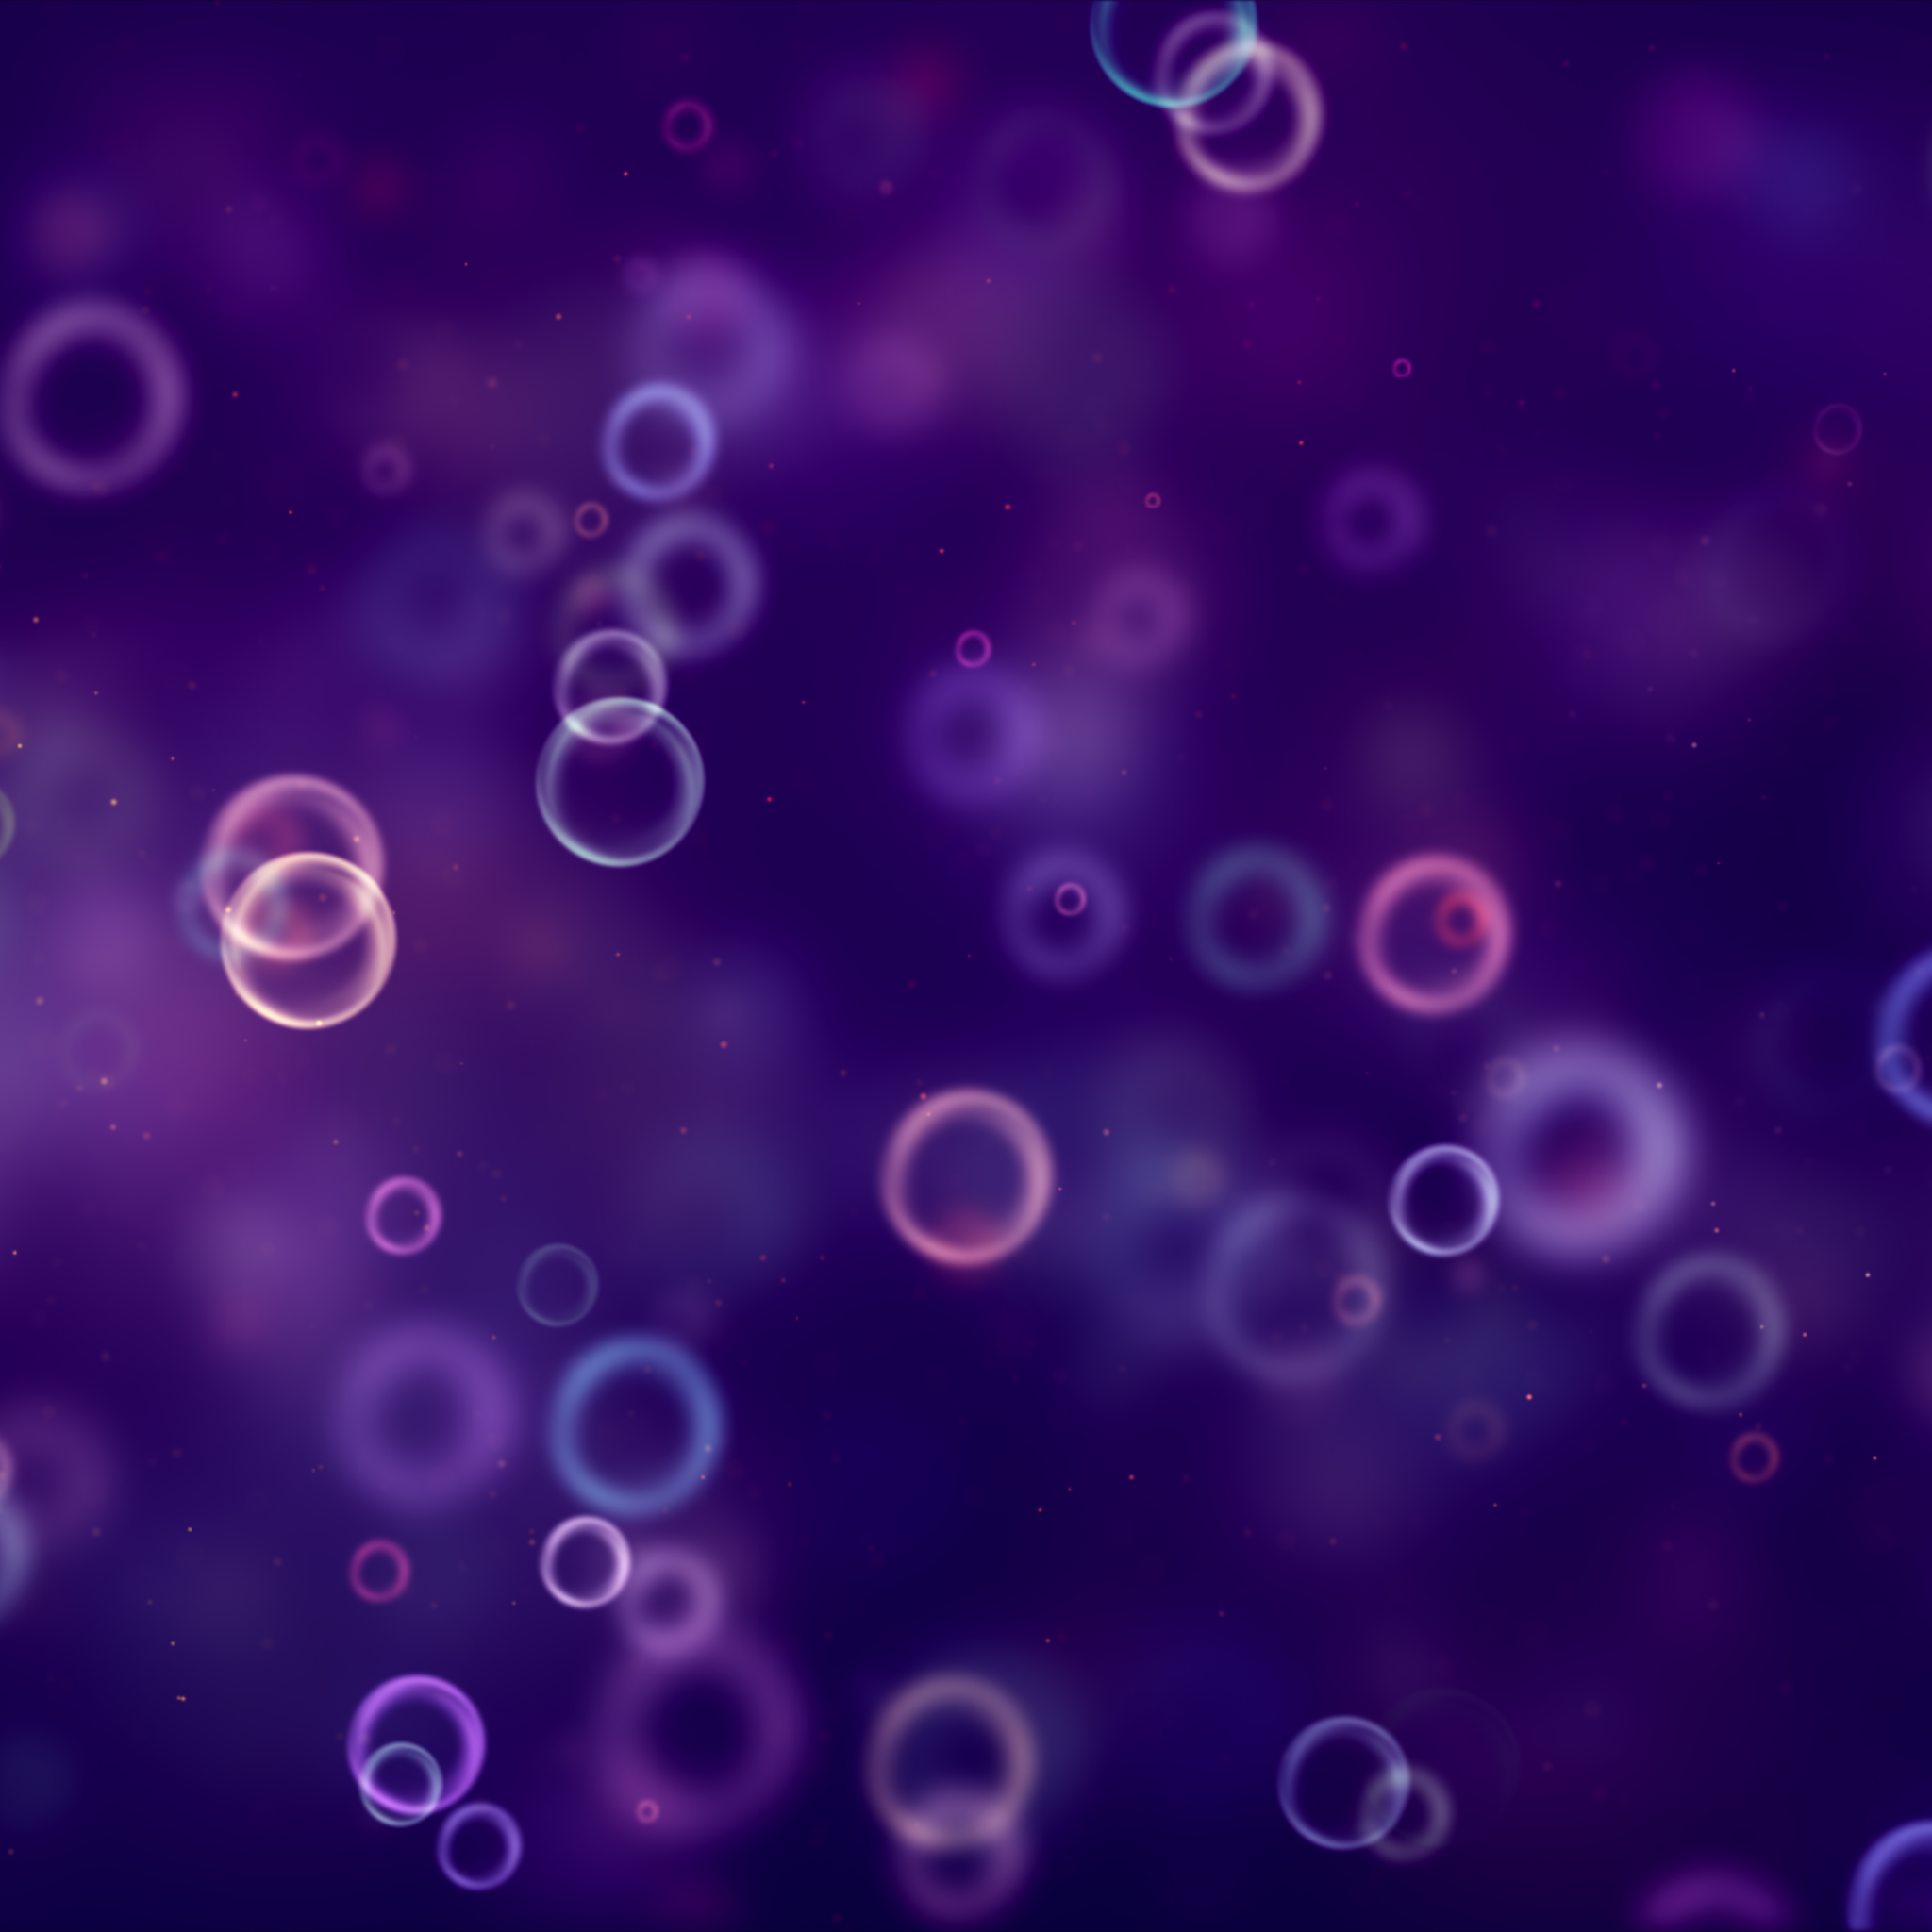 blurry bubbles wallpaper